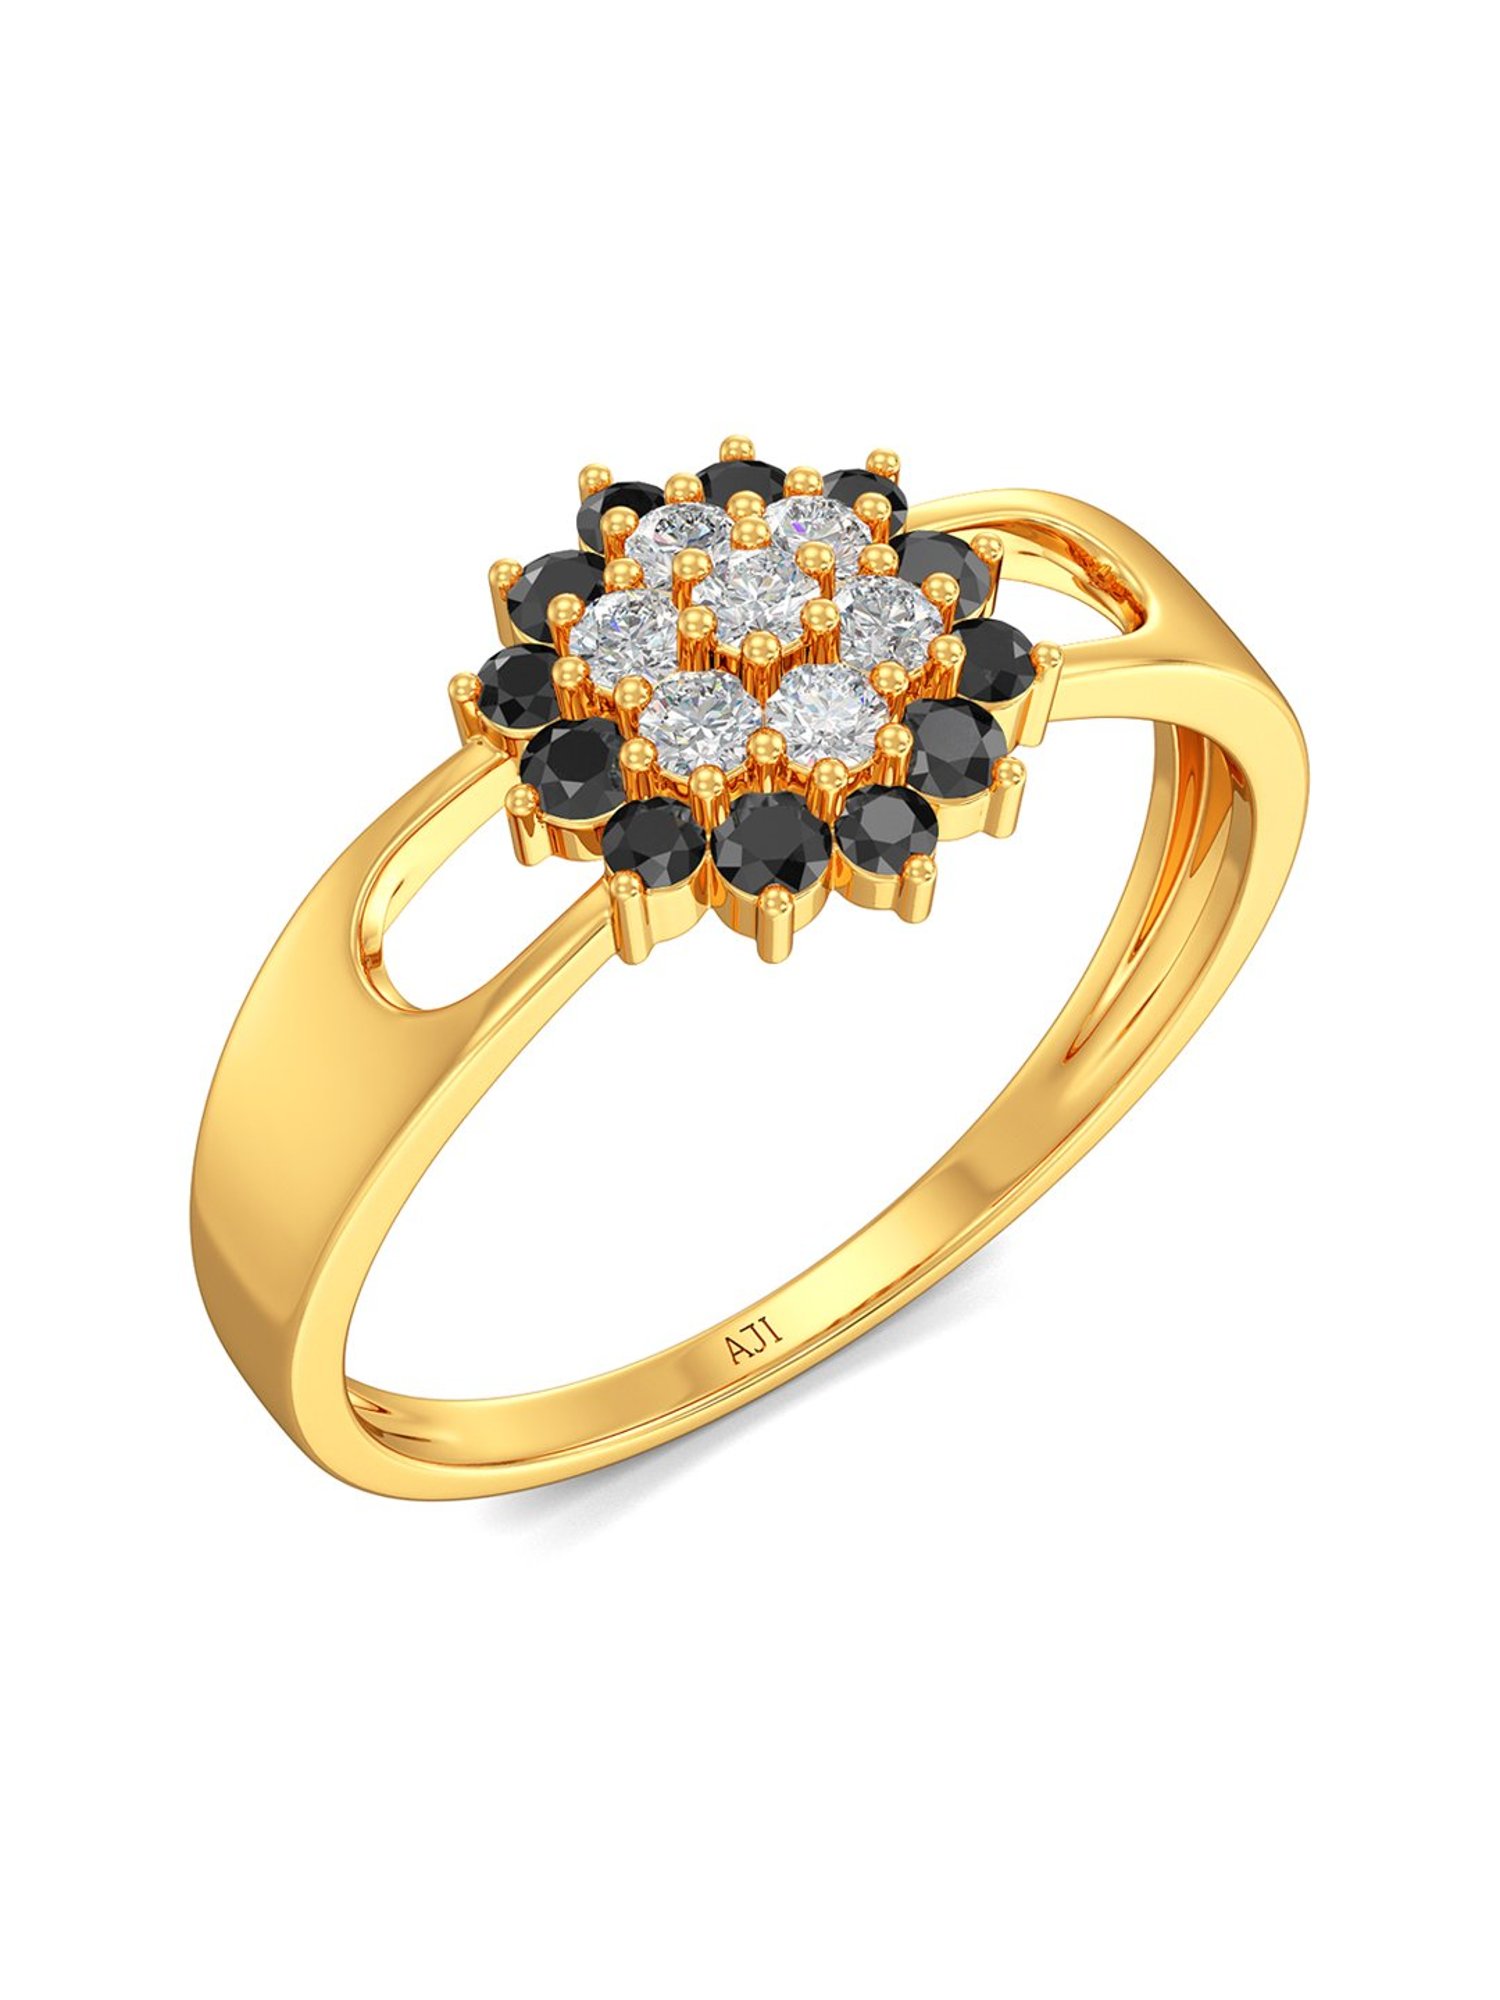 Joyalukkas 22k gold kids Ring : Amazon.in: Jewellery